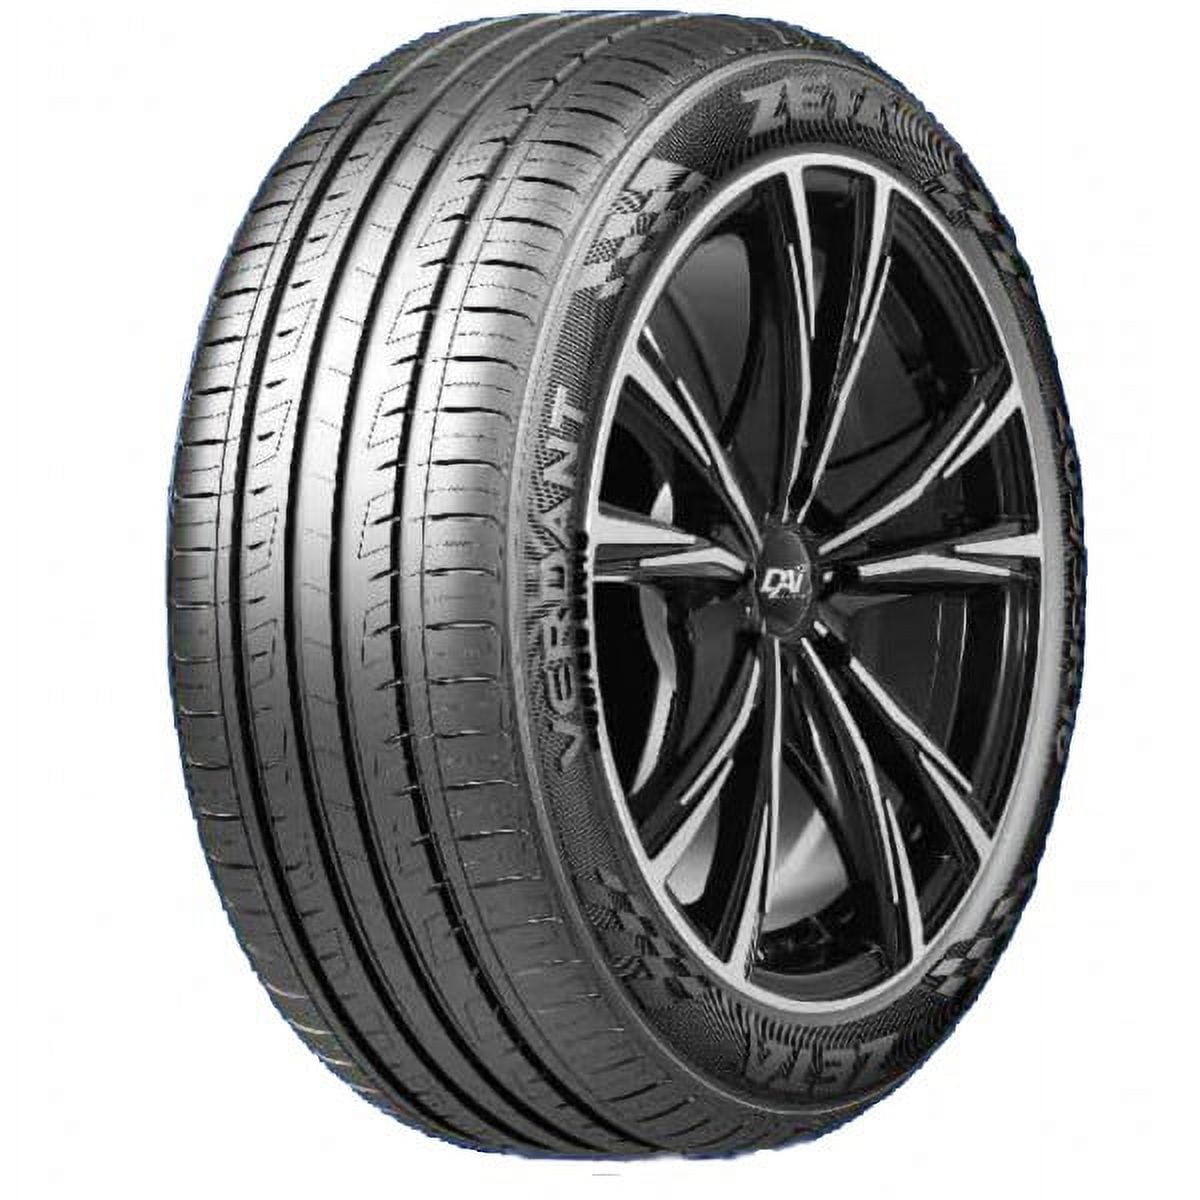 Goodyear Assurance H Max LE, Honda 185/65R15 Tire 88 Fit EV Hyundai 2013-14 Accent 2017 Fits: Fuel